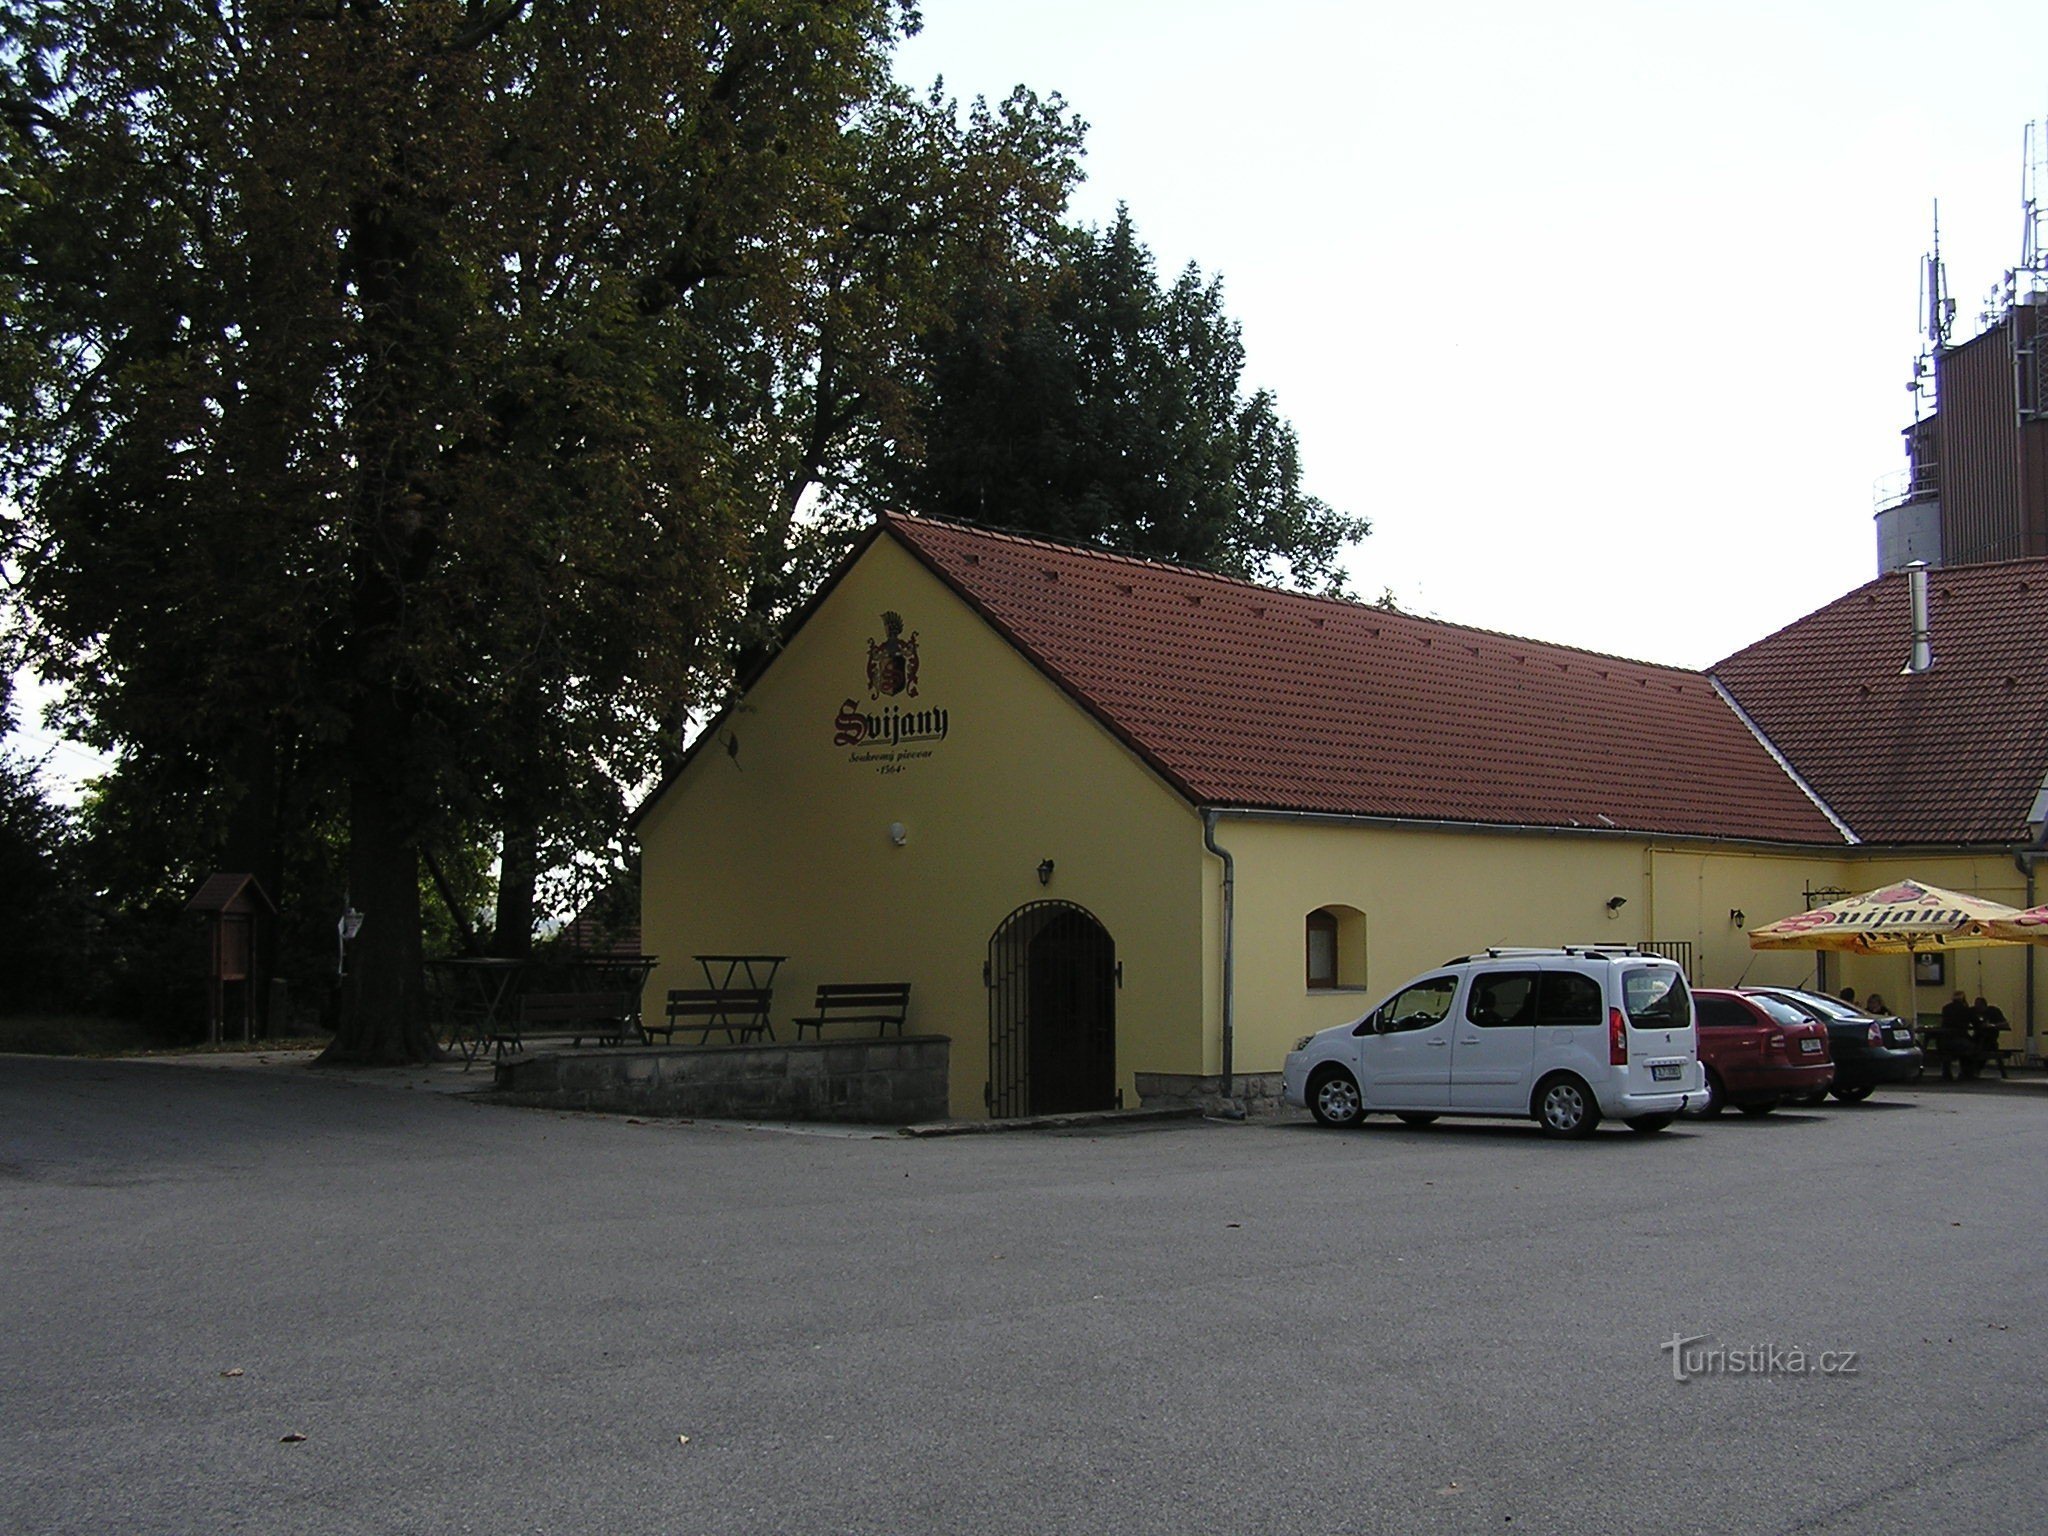 Svijany Brewery (8/2014)